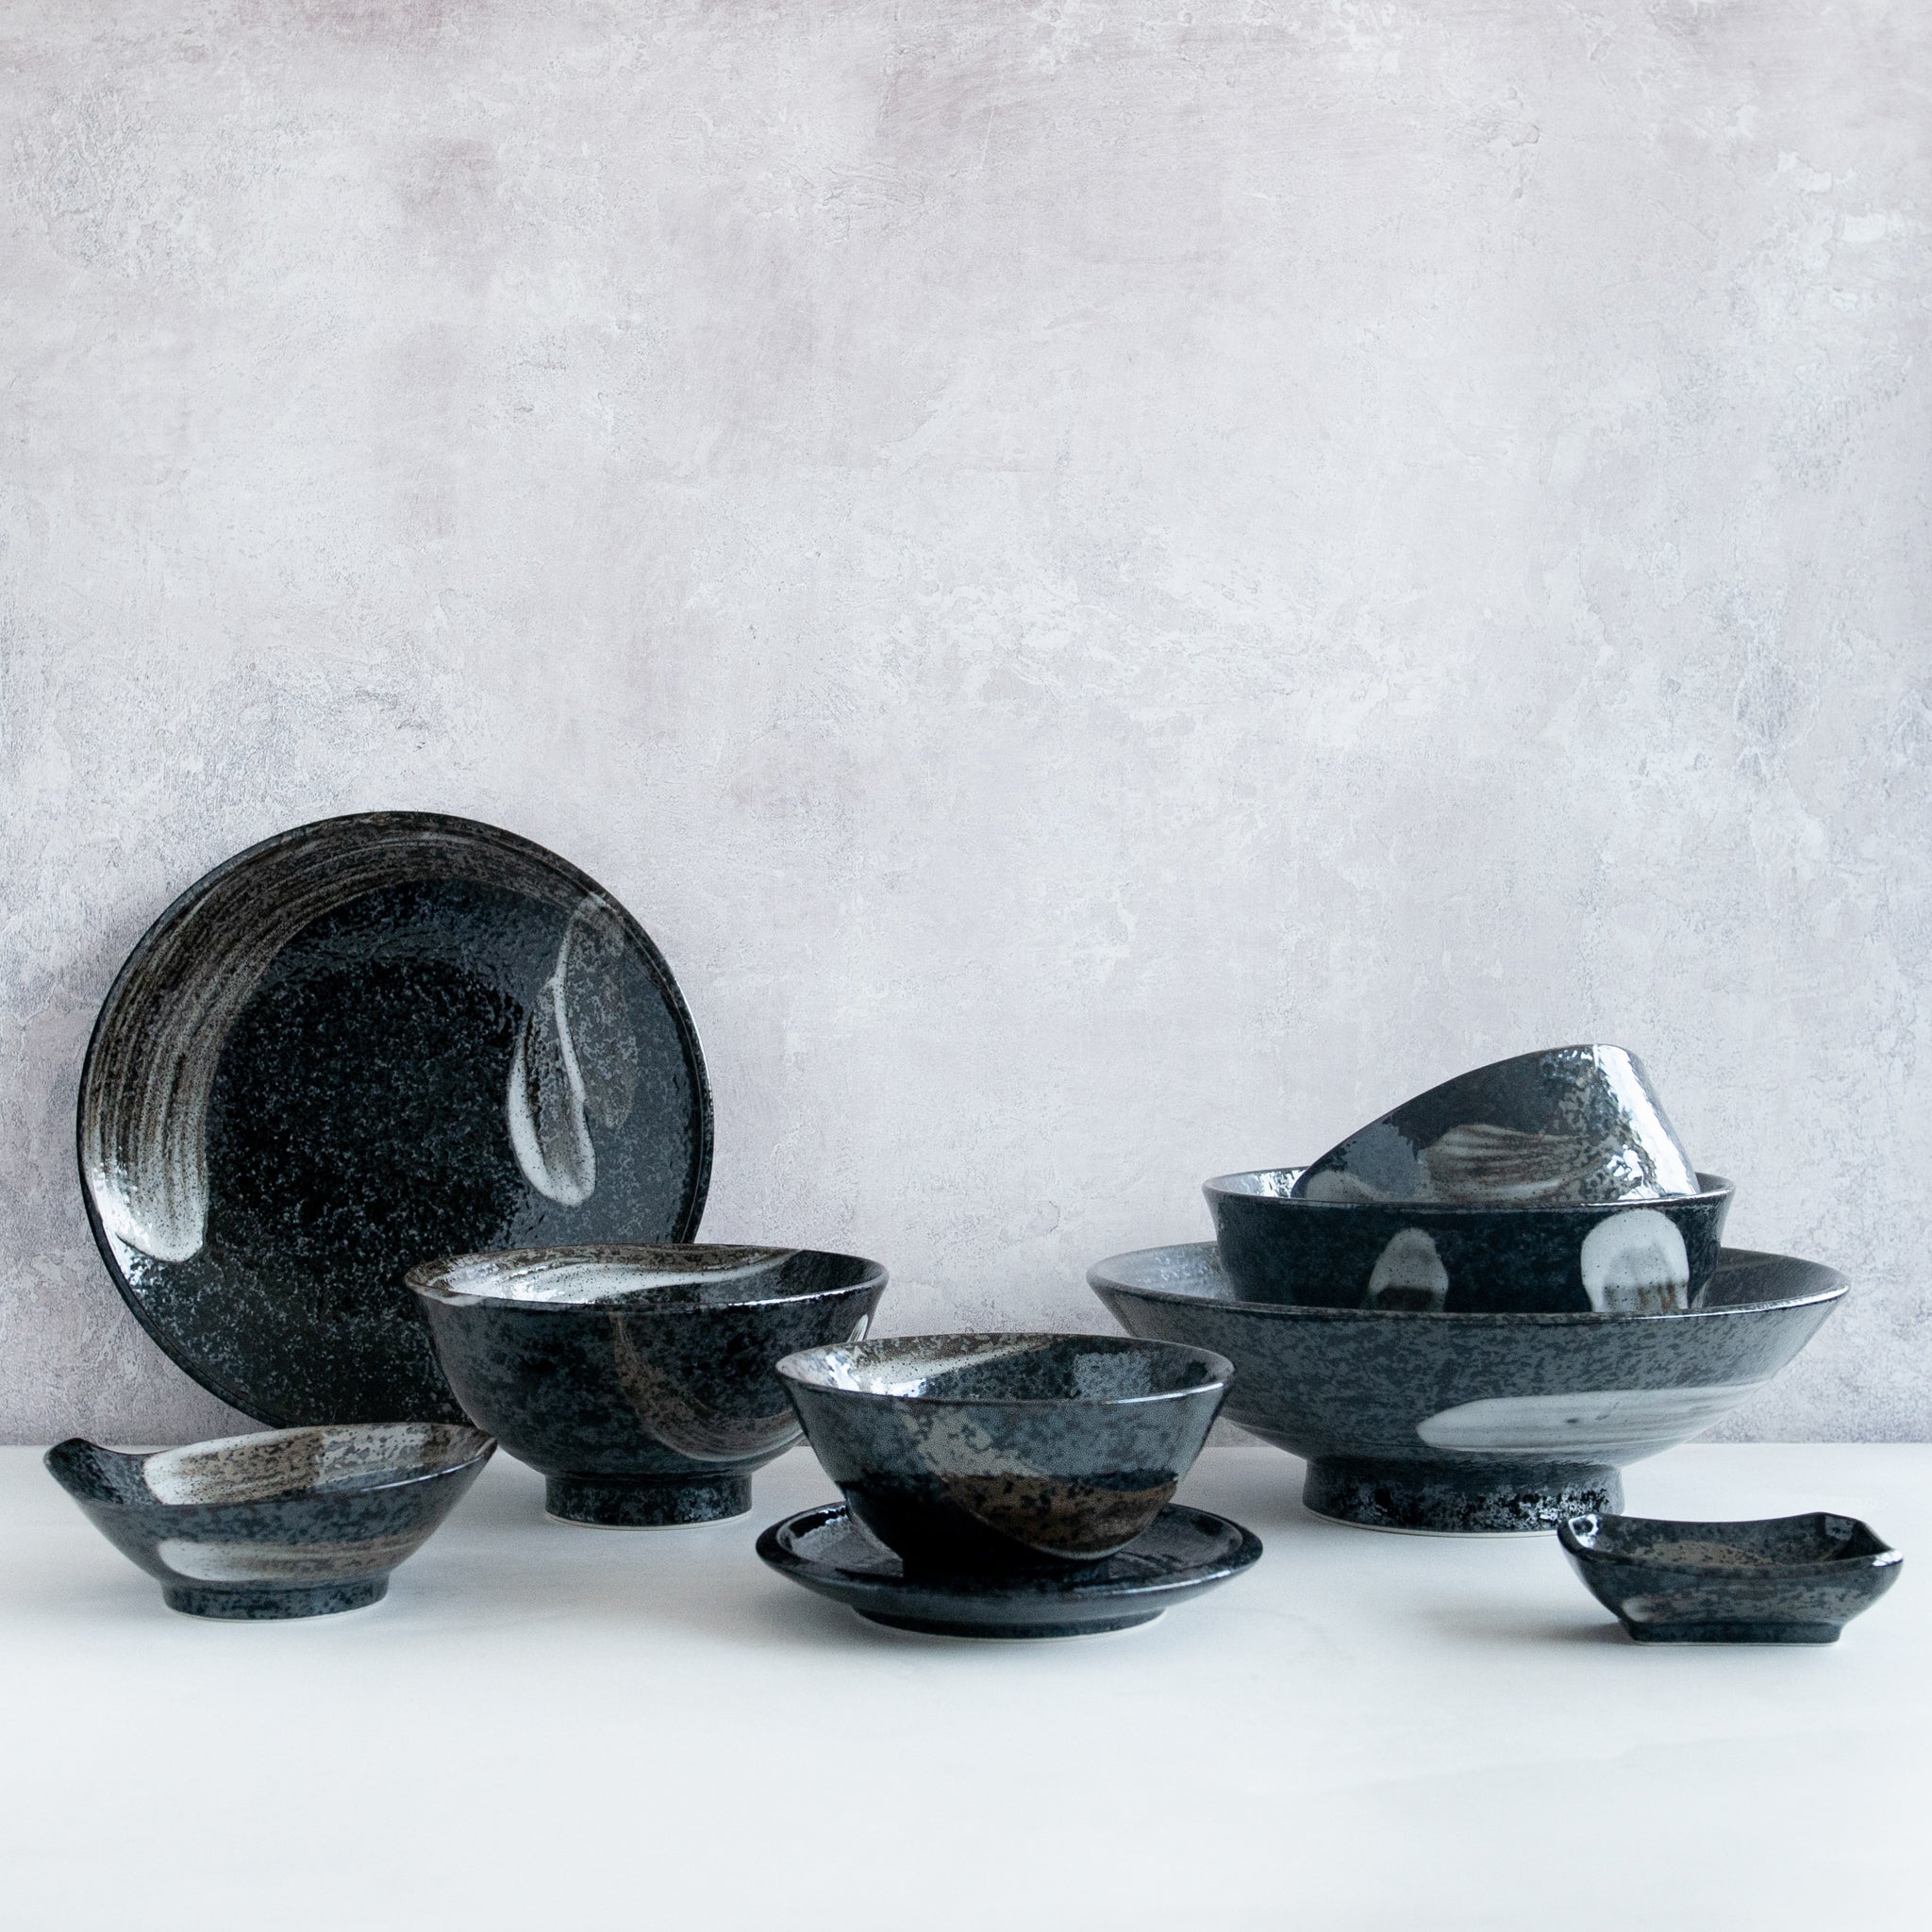 Kiji Stoneware & Ceramics Karasuba-Iro Shallow Bowl 25cm Tableware Japanese Tableware Japanese Food